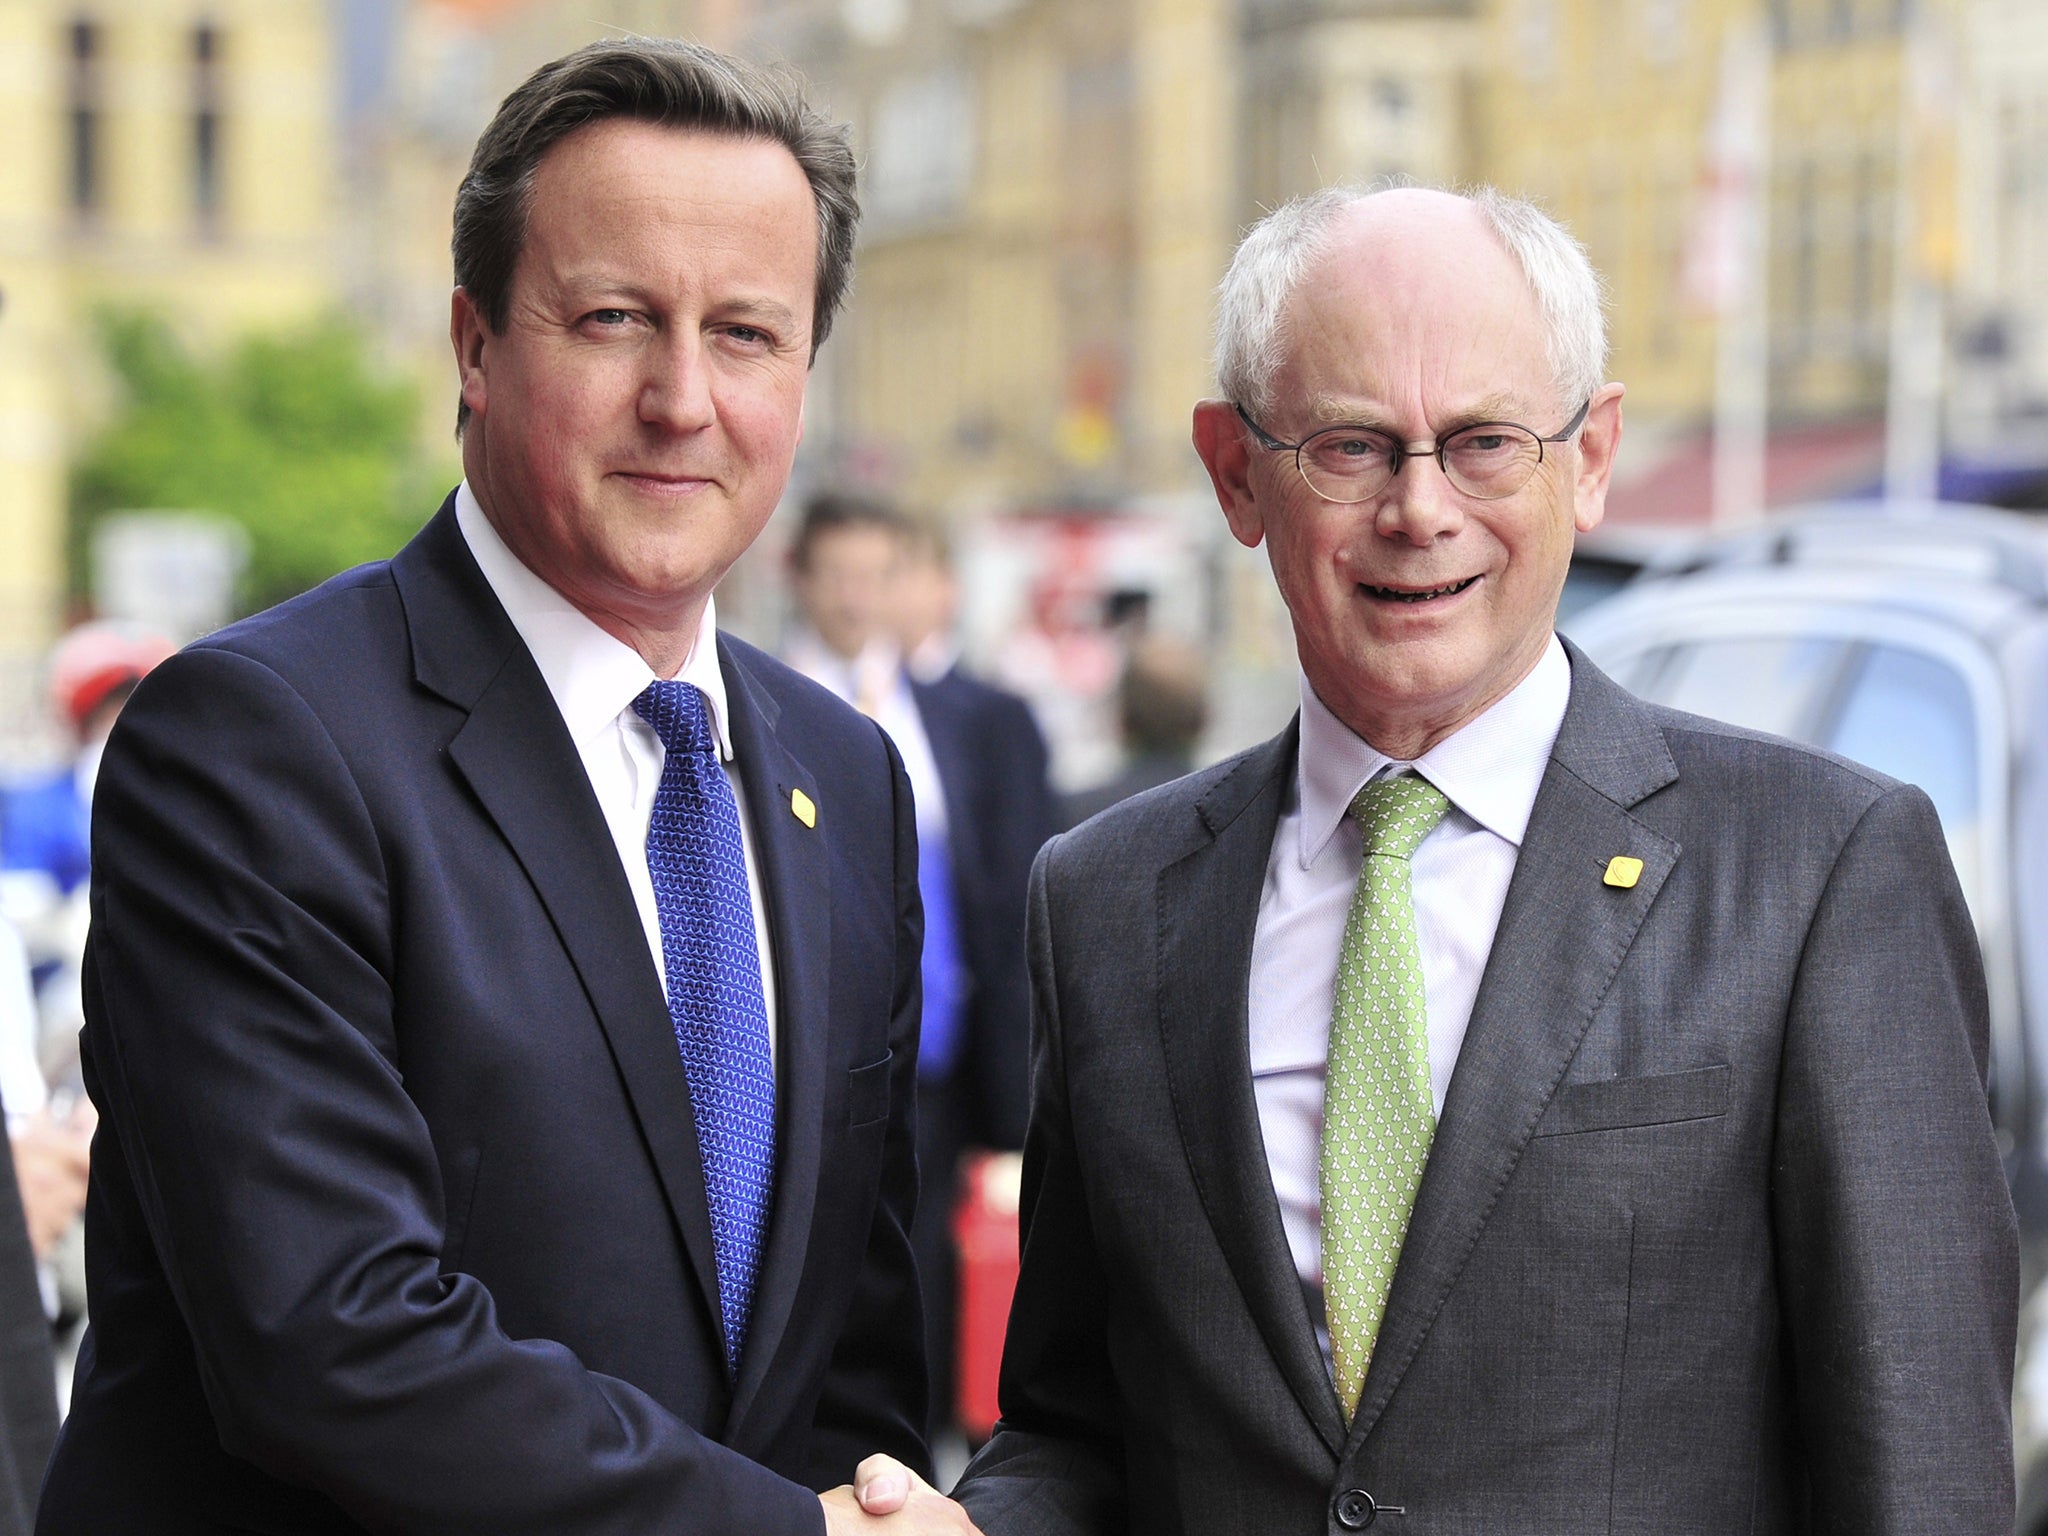 Former European Council President Herman Van Rompuy shakes hands with British Prime Minister David Cameron